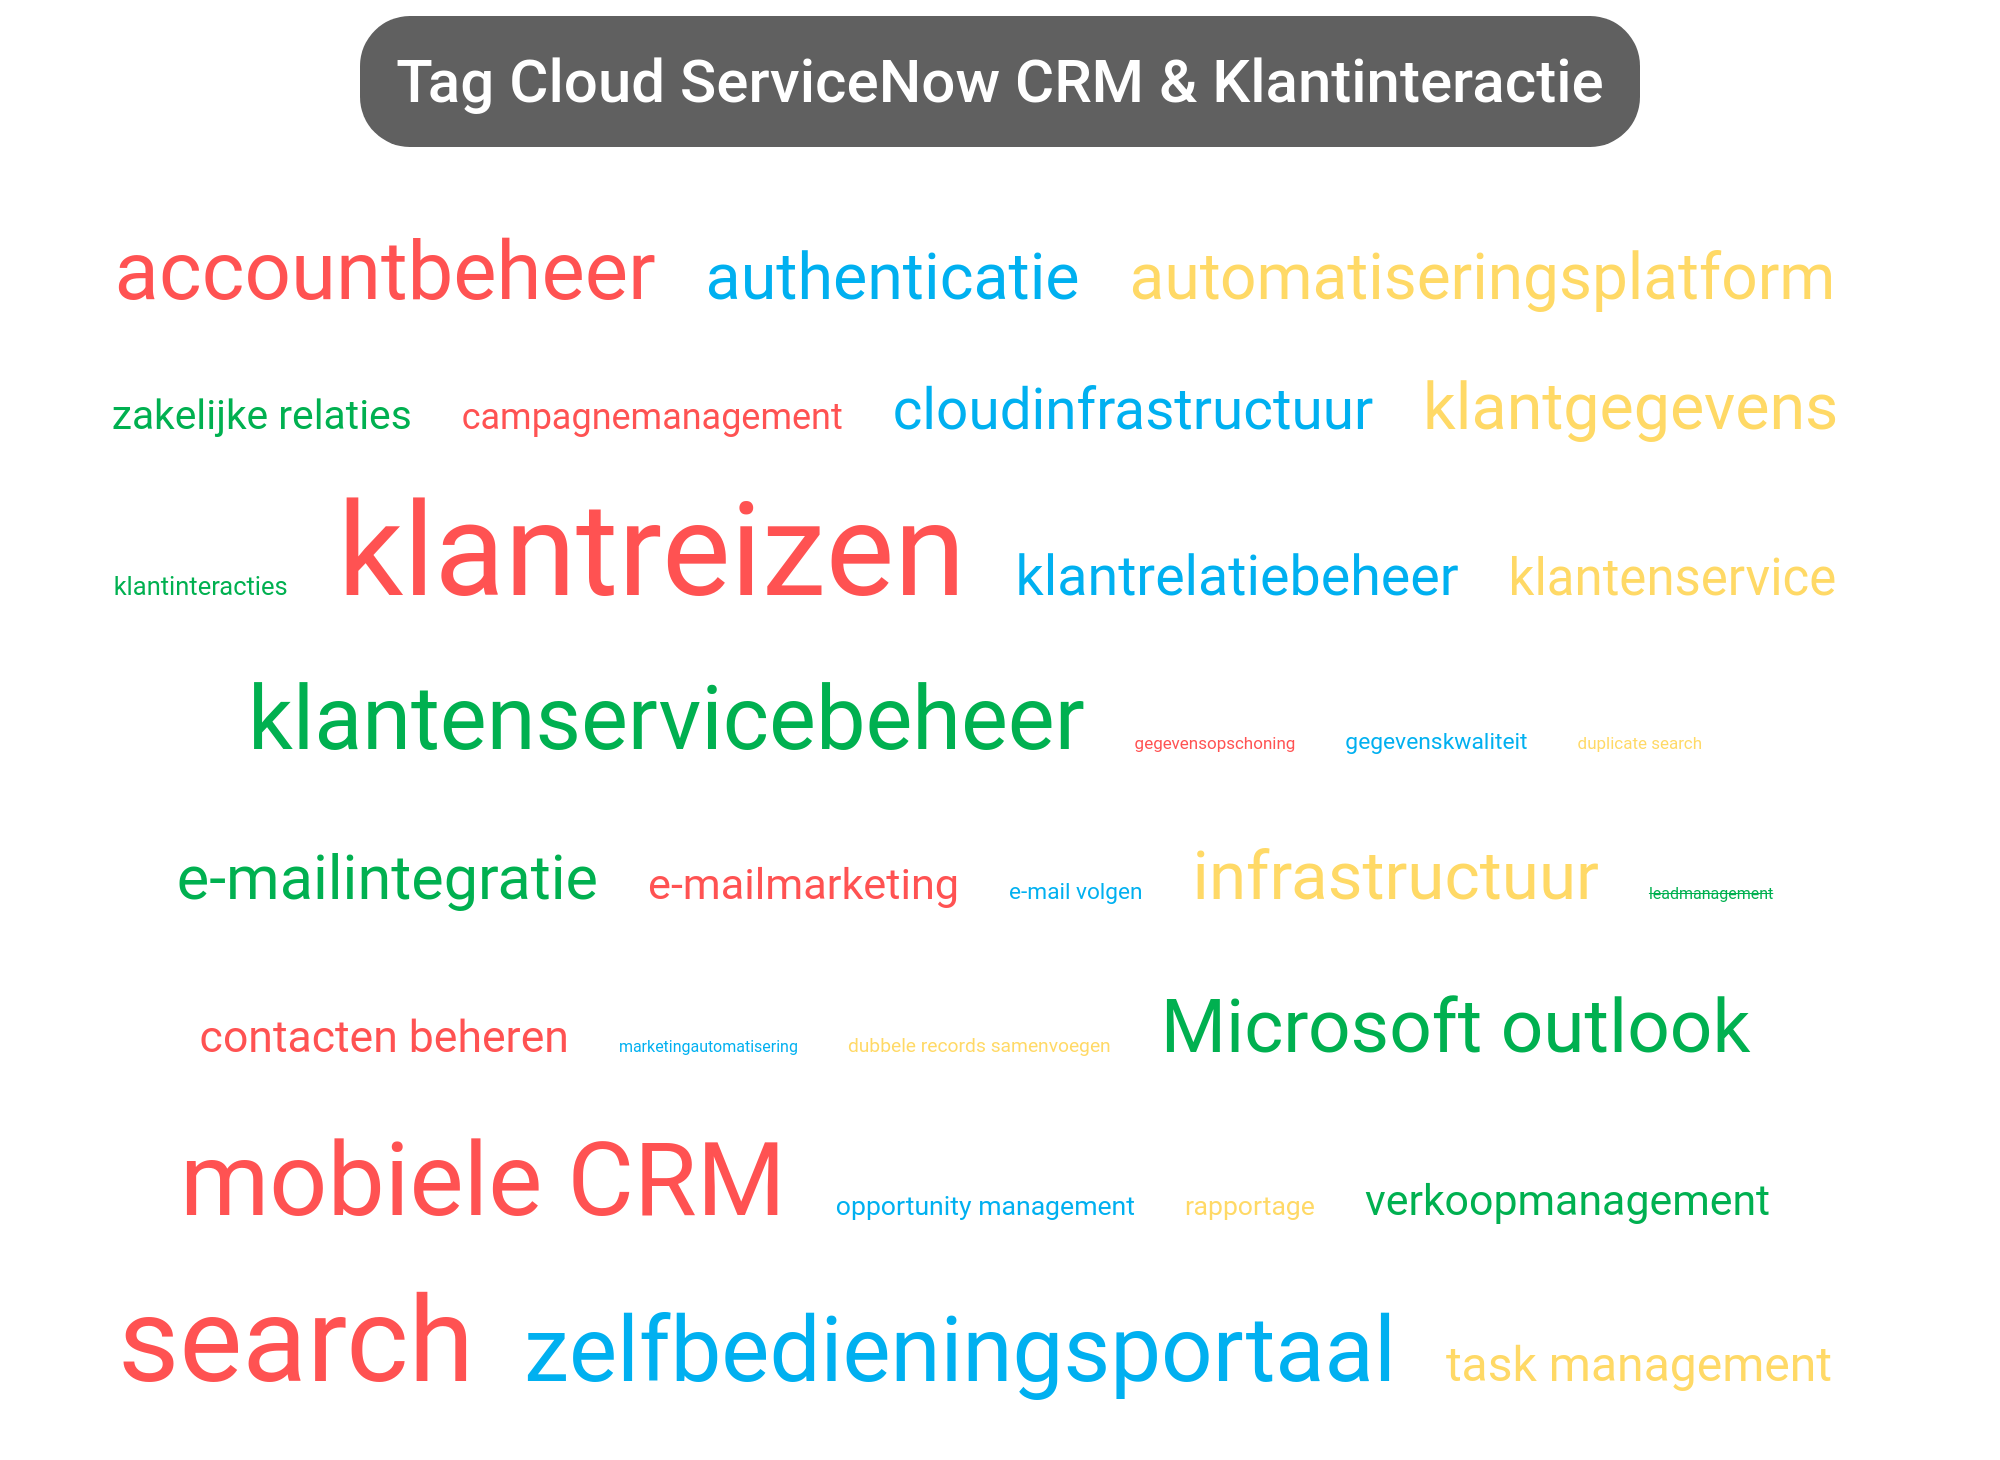 Tag cloud van ServiceNow platform tools.